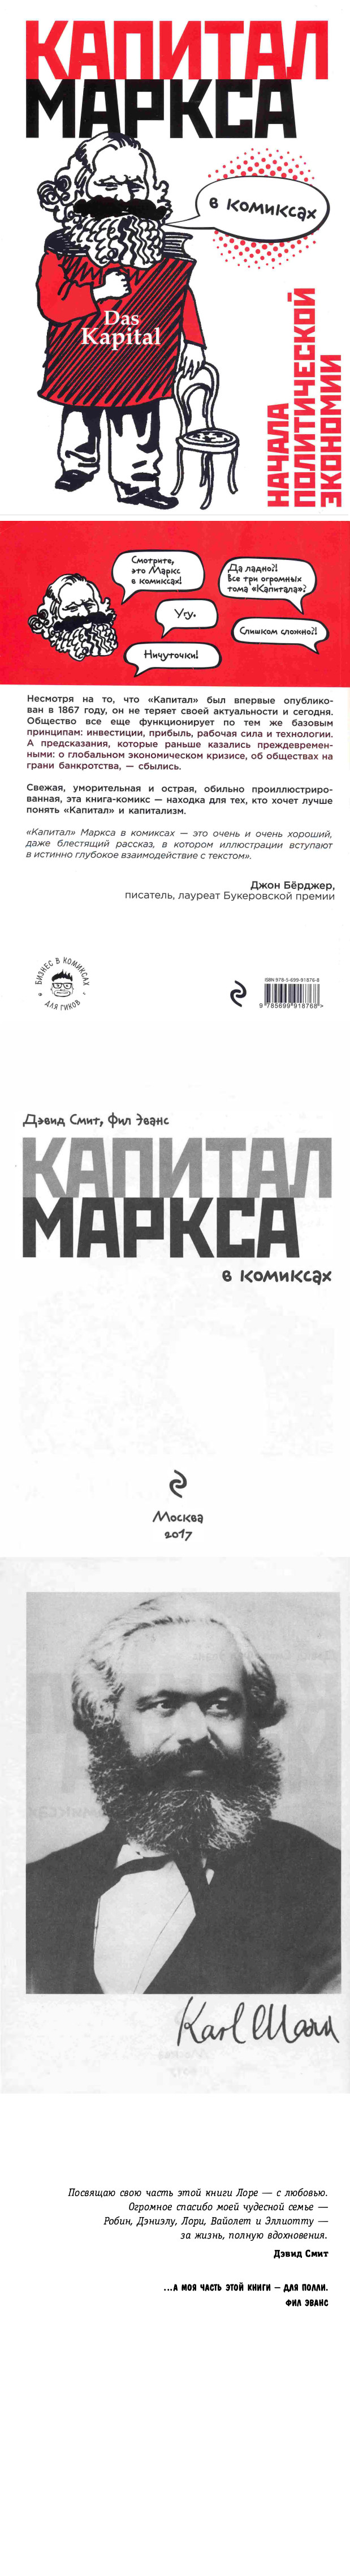 Capital (in comics). - Karl Marx, Comics, Humor, Story, Capital, Economy, Longpost